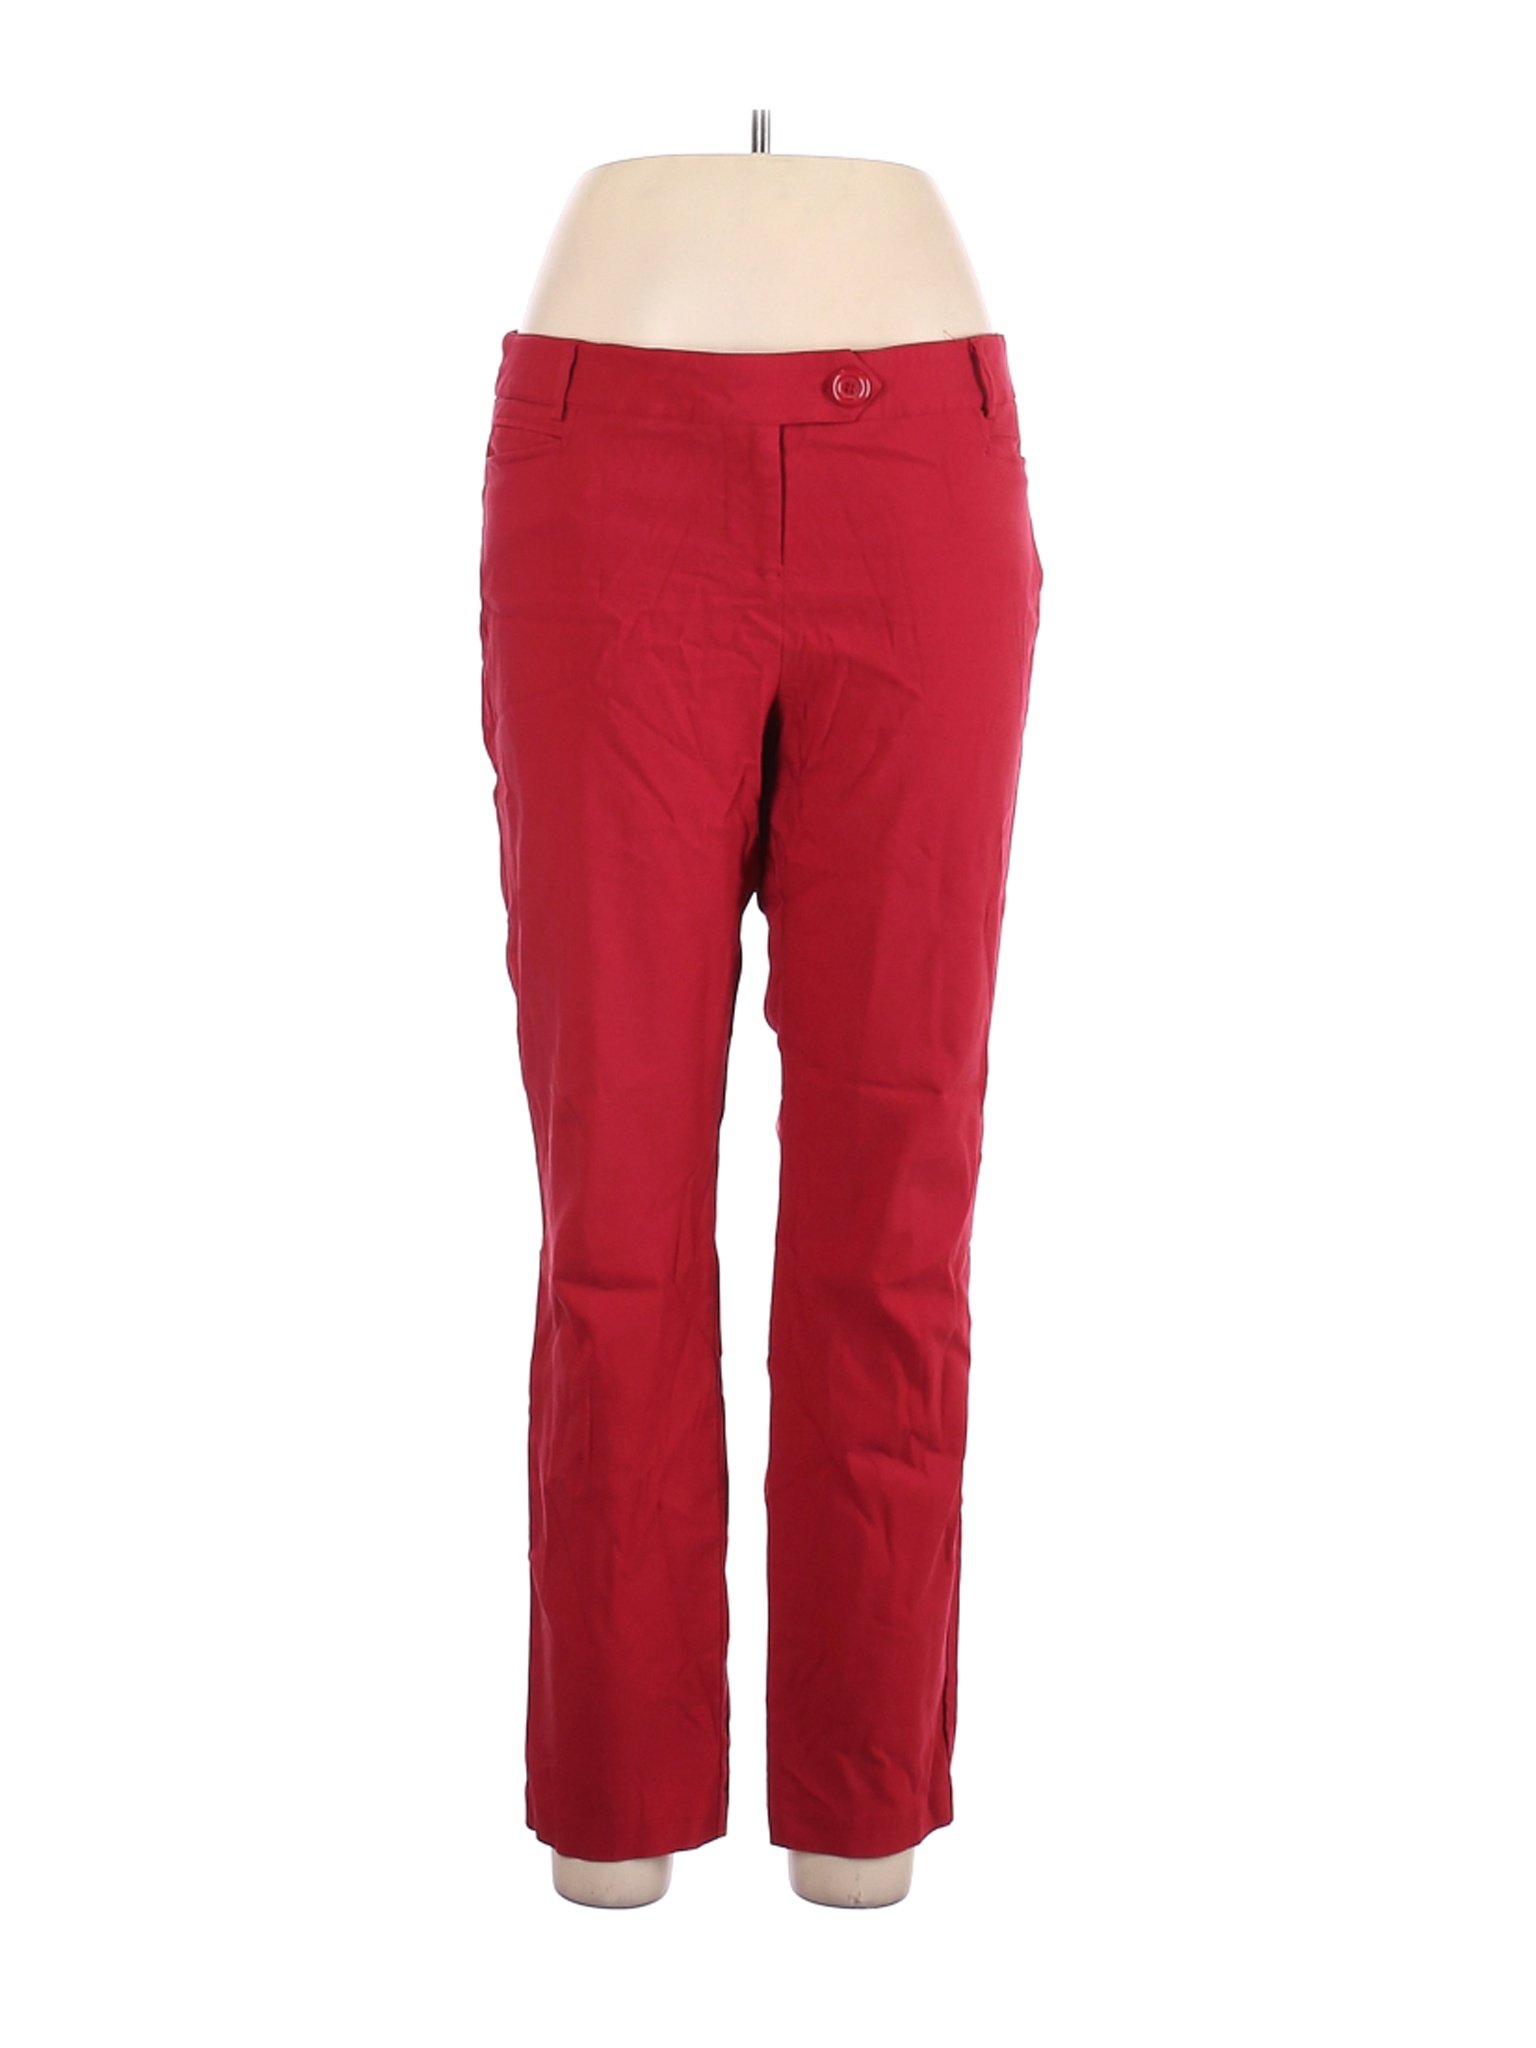 SOHO Apparel Ltd Women Red Dress Pants 12 | eBay